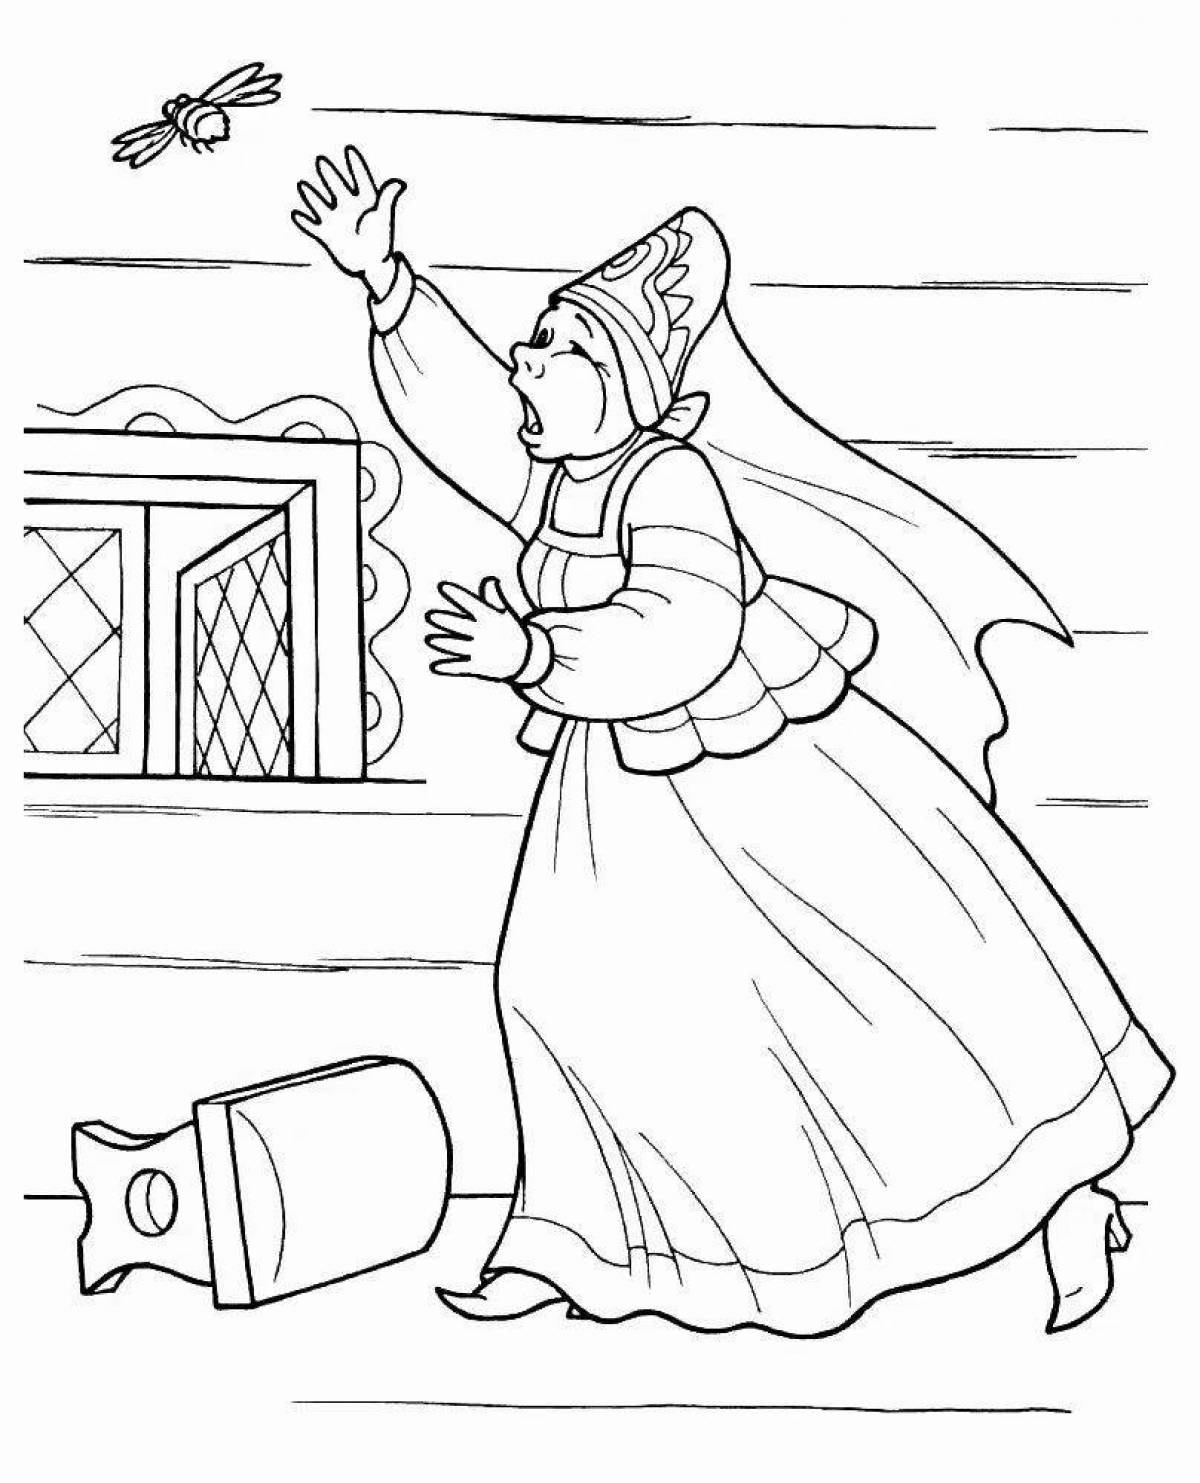 Illustration for the tale of Tsar Saltan #2